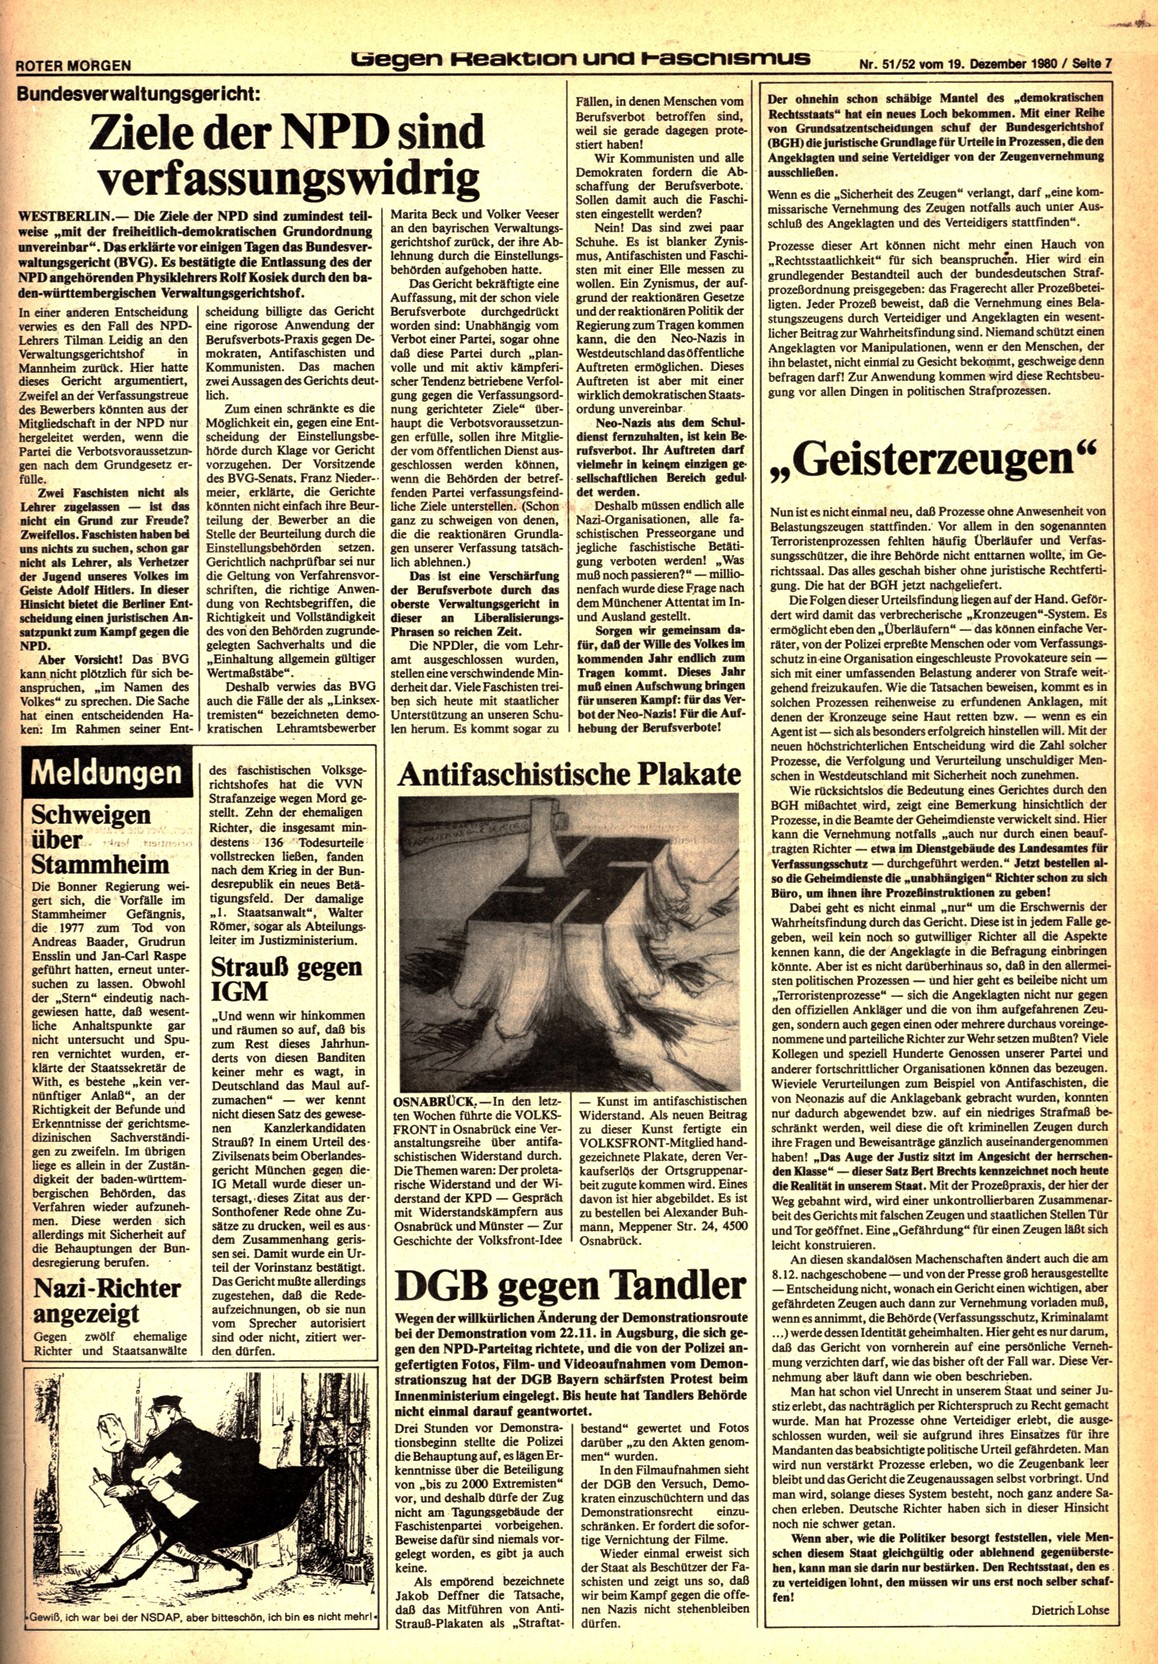 Roter Morgen, 14. Jg., 19. Dezember 1980, Nr. 51/52, Seite 7